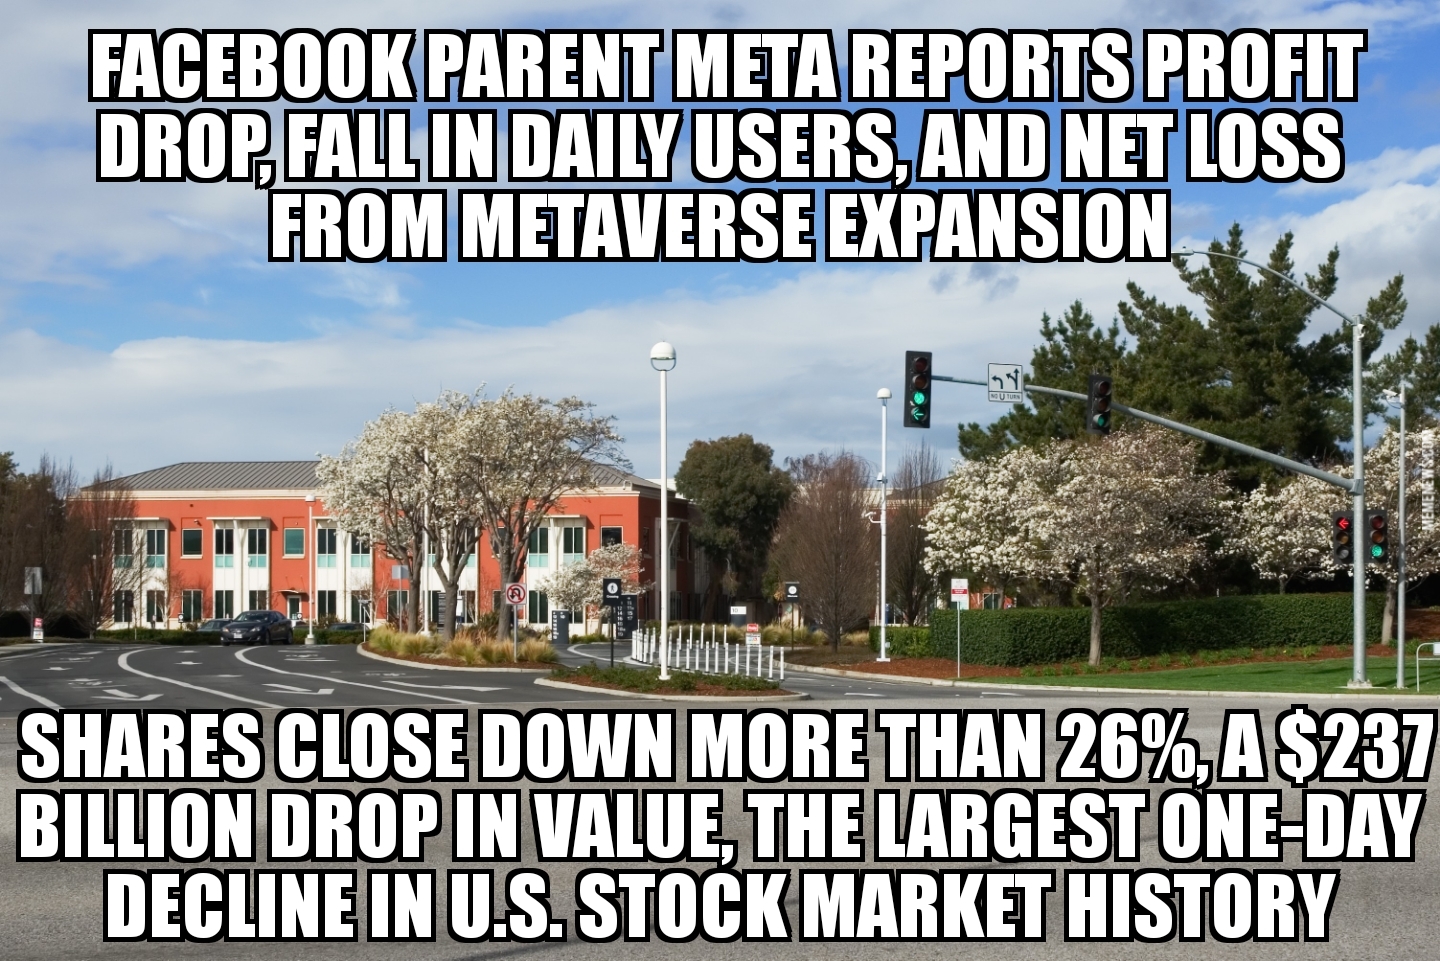 Meta stock has record drop